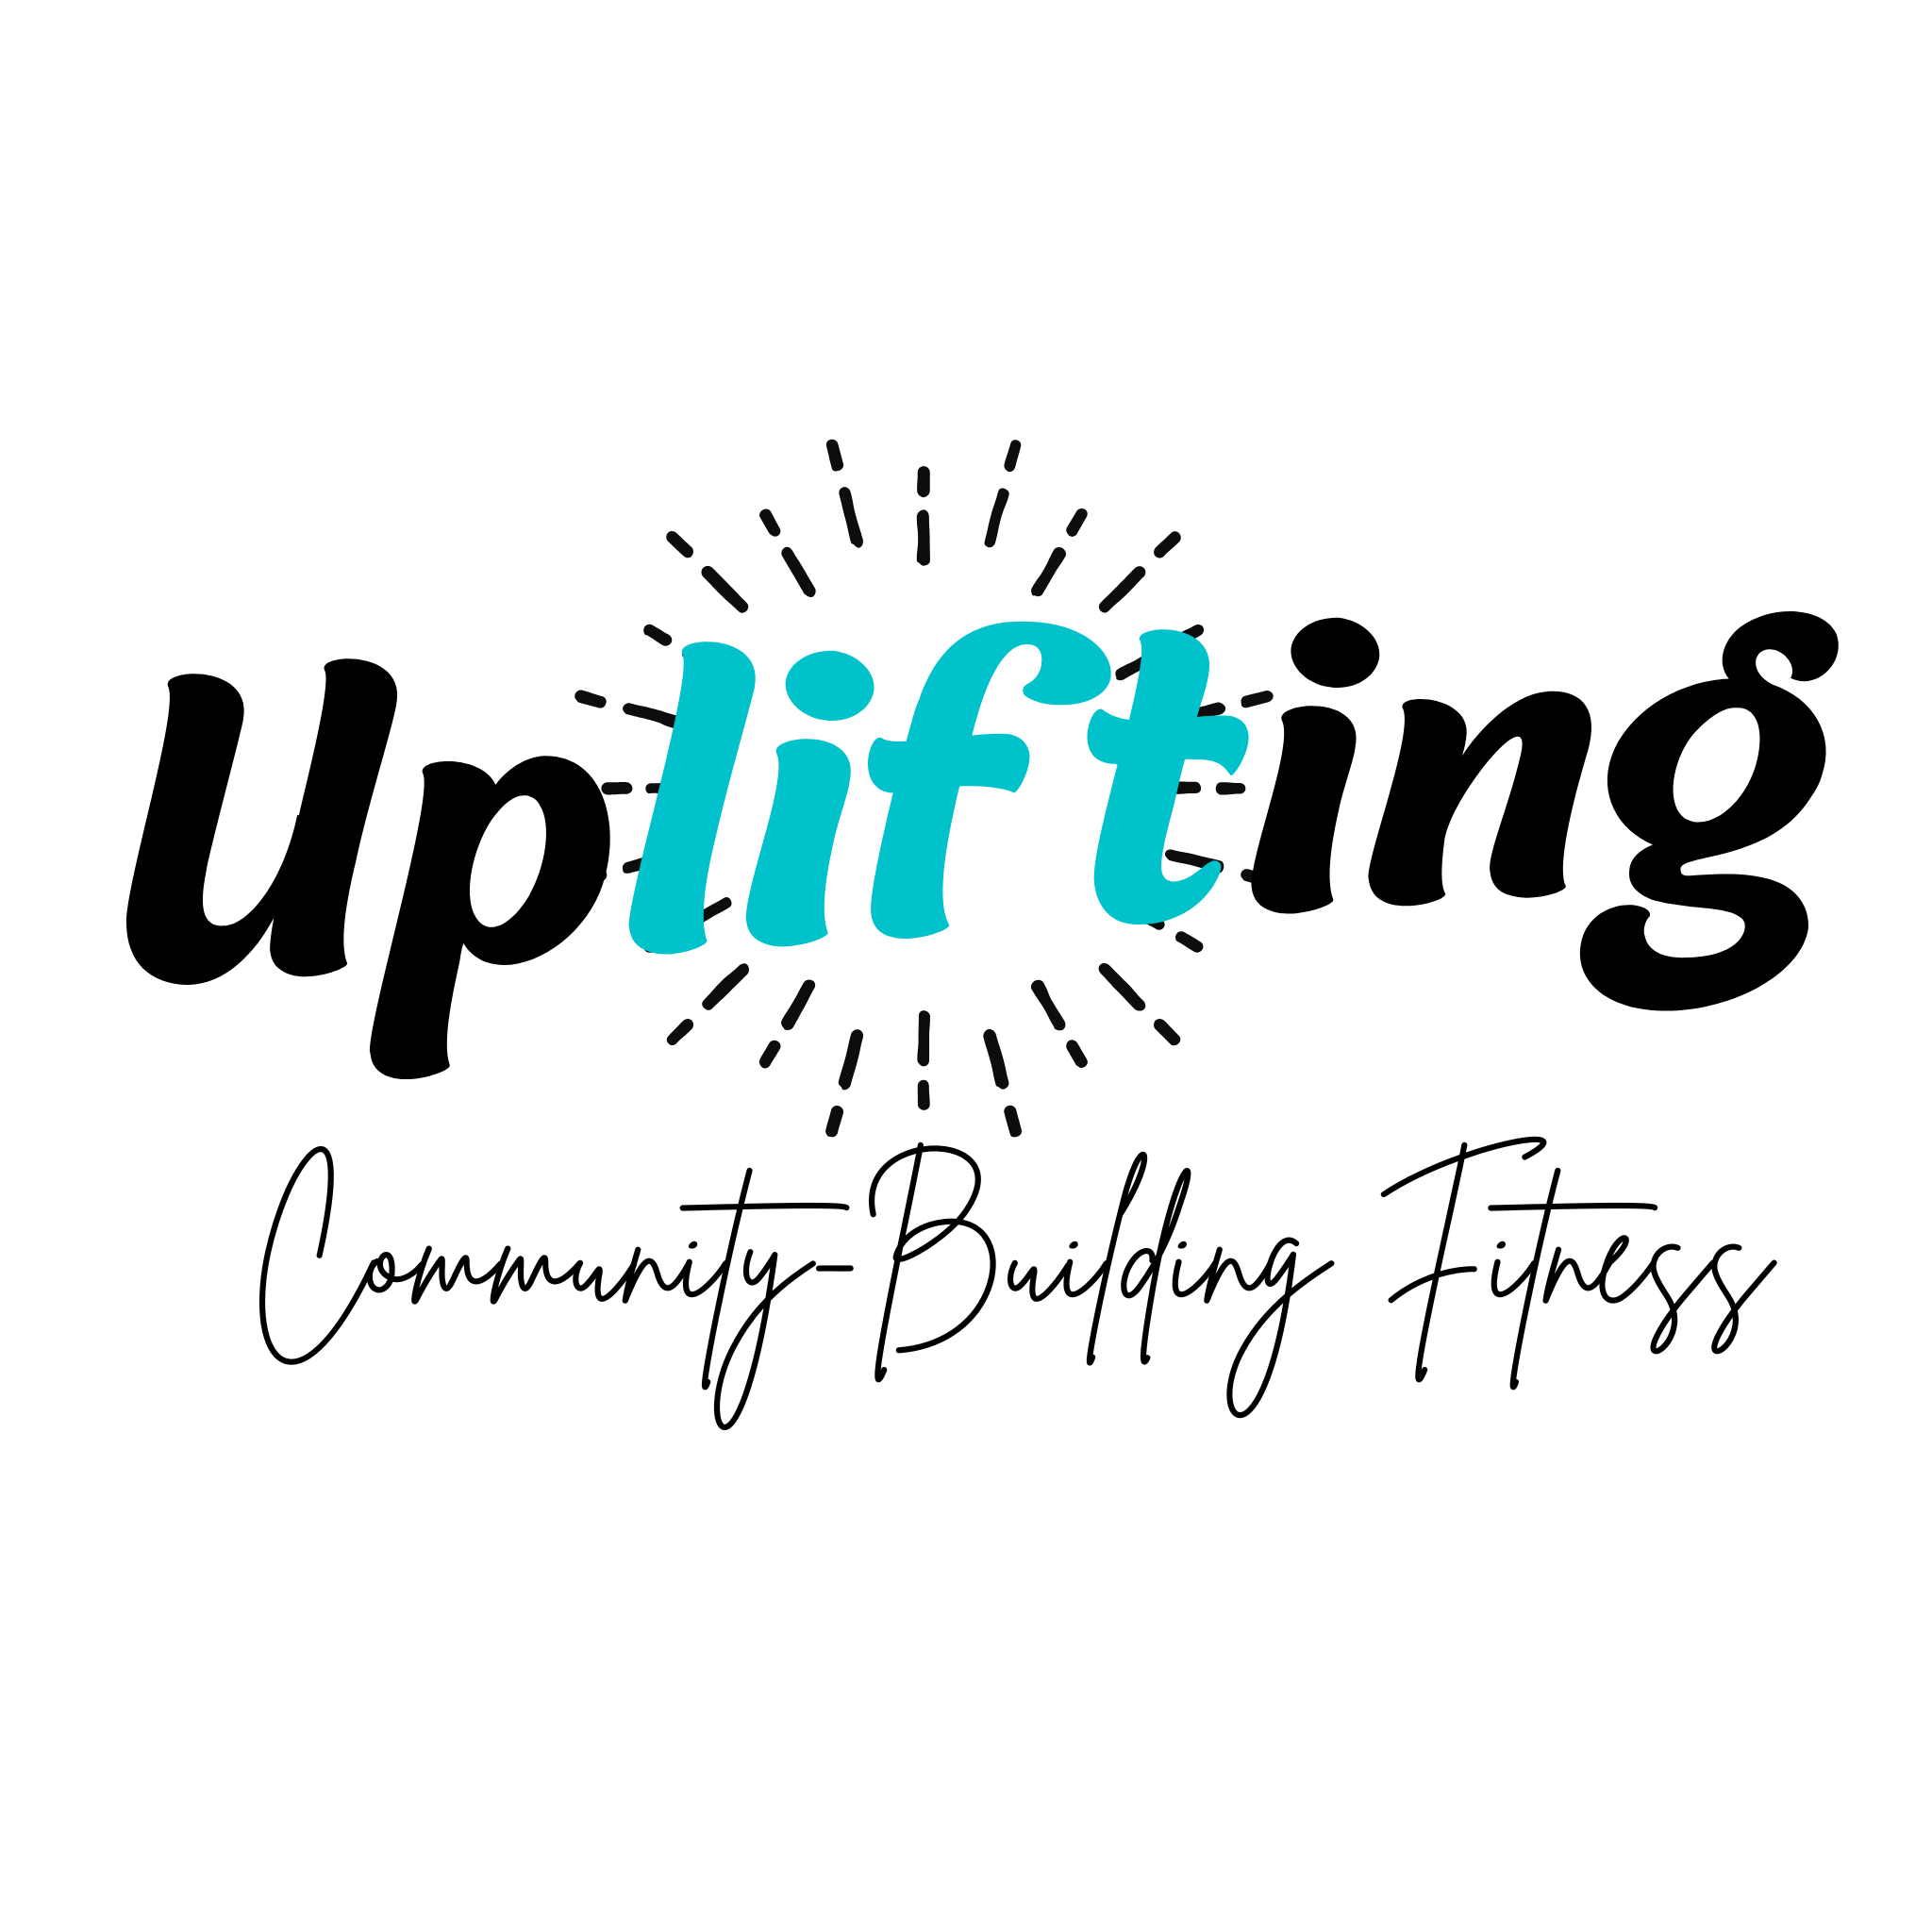 Uplifting Community-Building Fitness